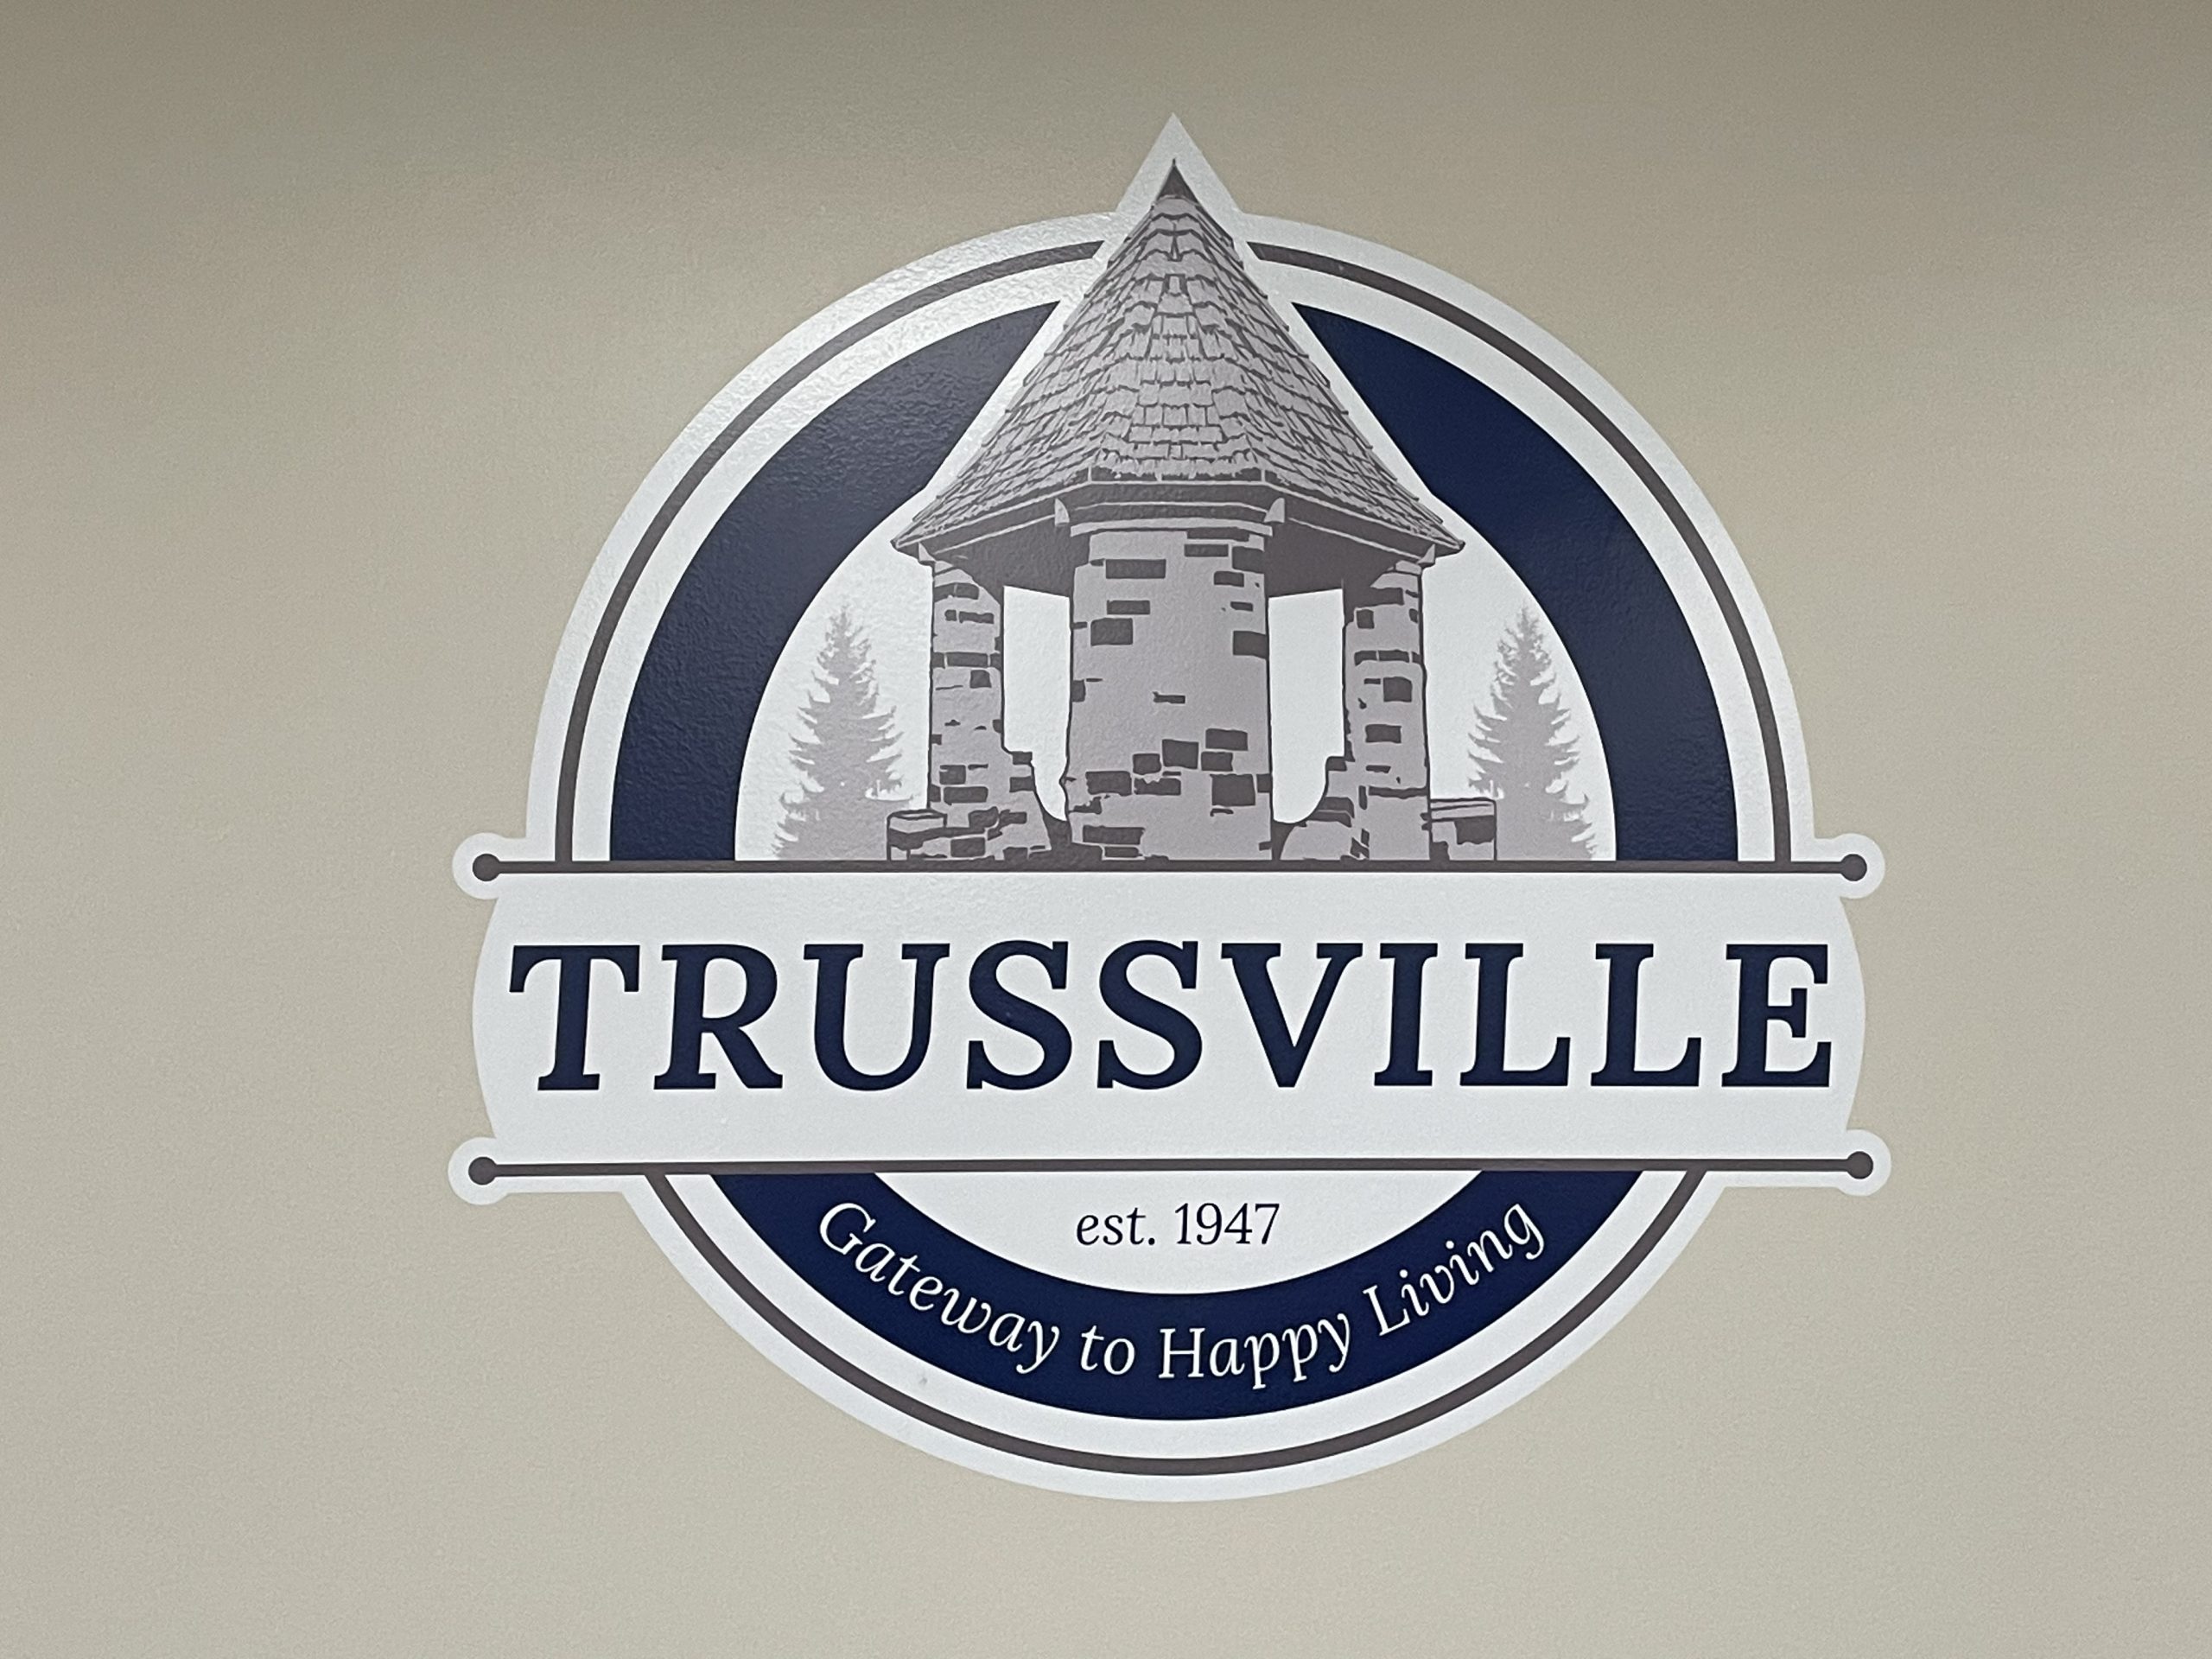 Trussville Council reminds public of Trussville BOE board member application deadline